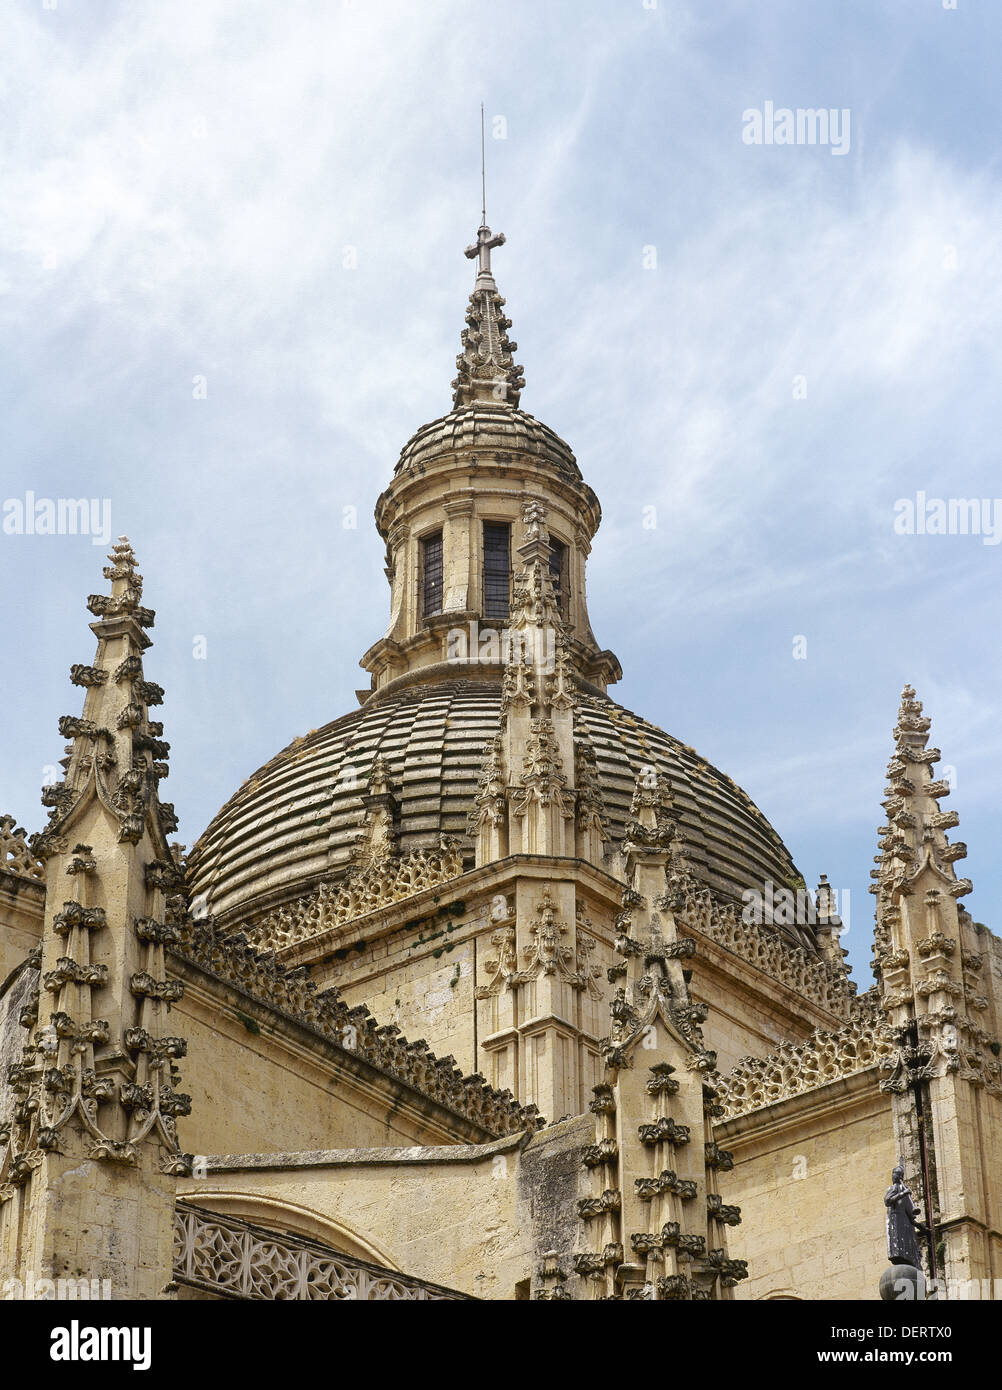 Spagna. Segovia. Cattedrale. In stile tardo gotico. Da Juan e Rodrigo Gil de Hontanon. Cupola e lanterna. Foto Stock